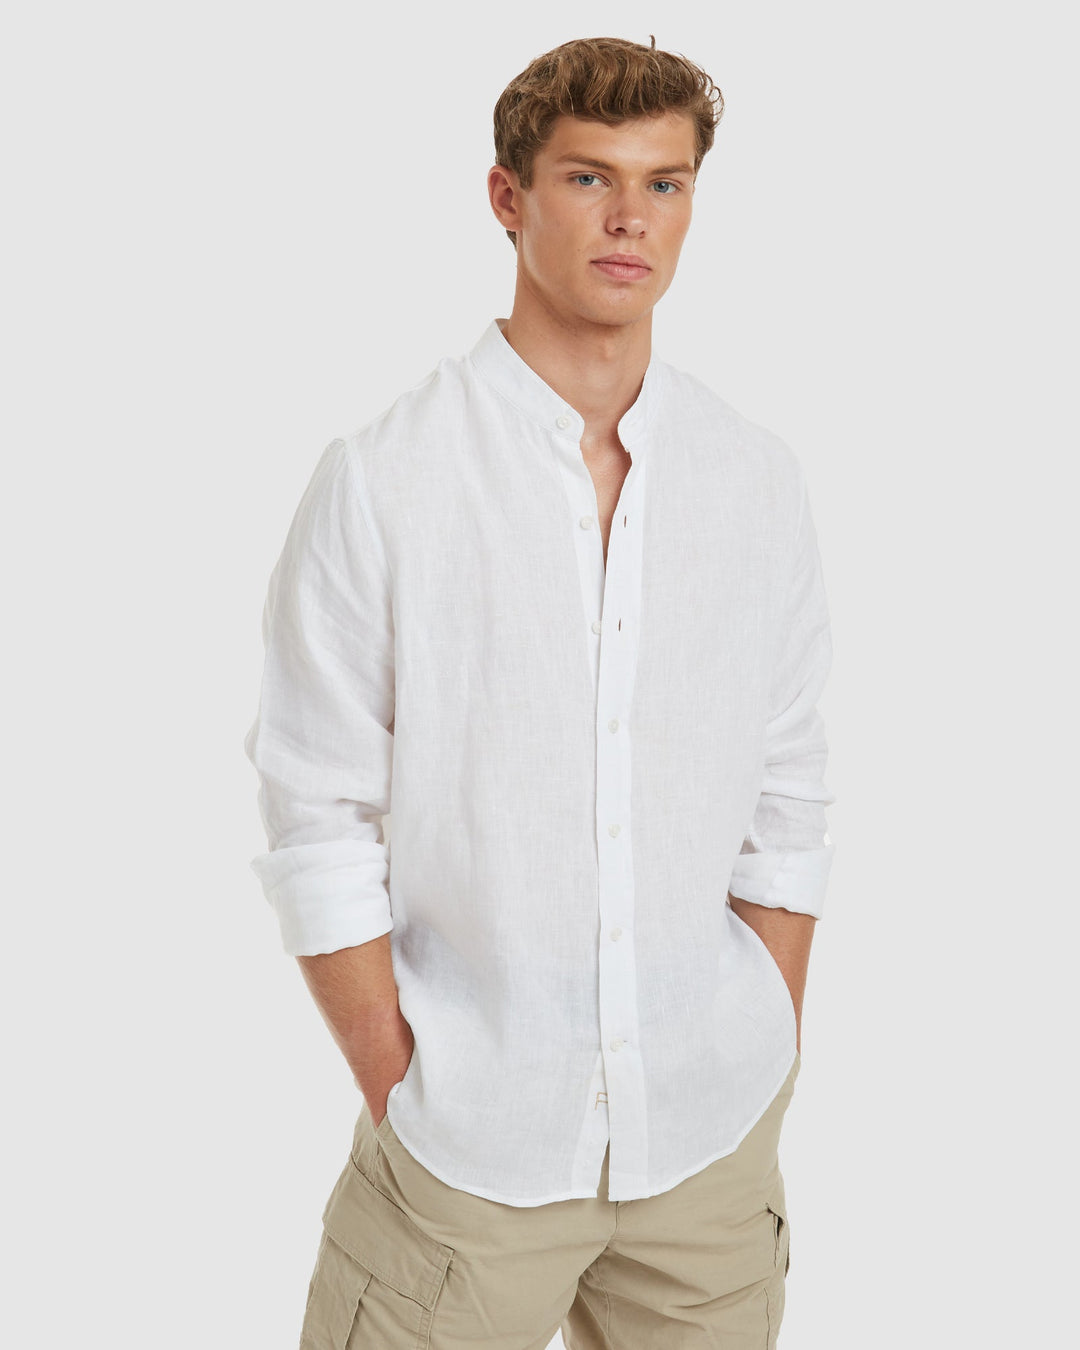 Palma White Mandarin Collar Linen Shirt - Slim Fit